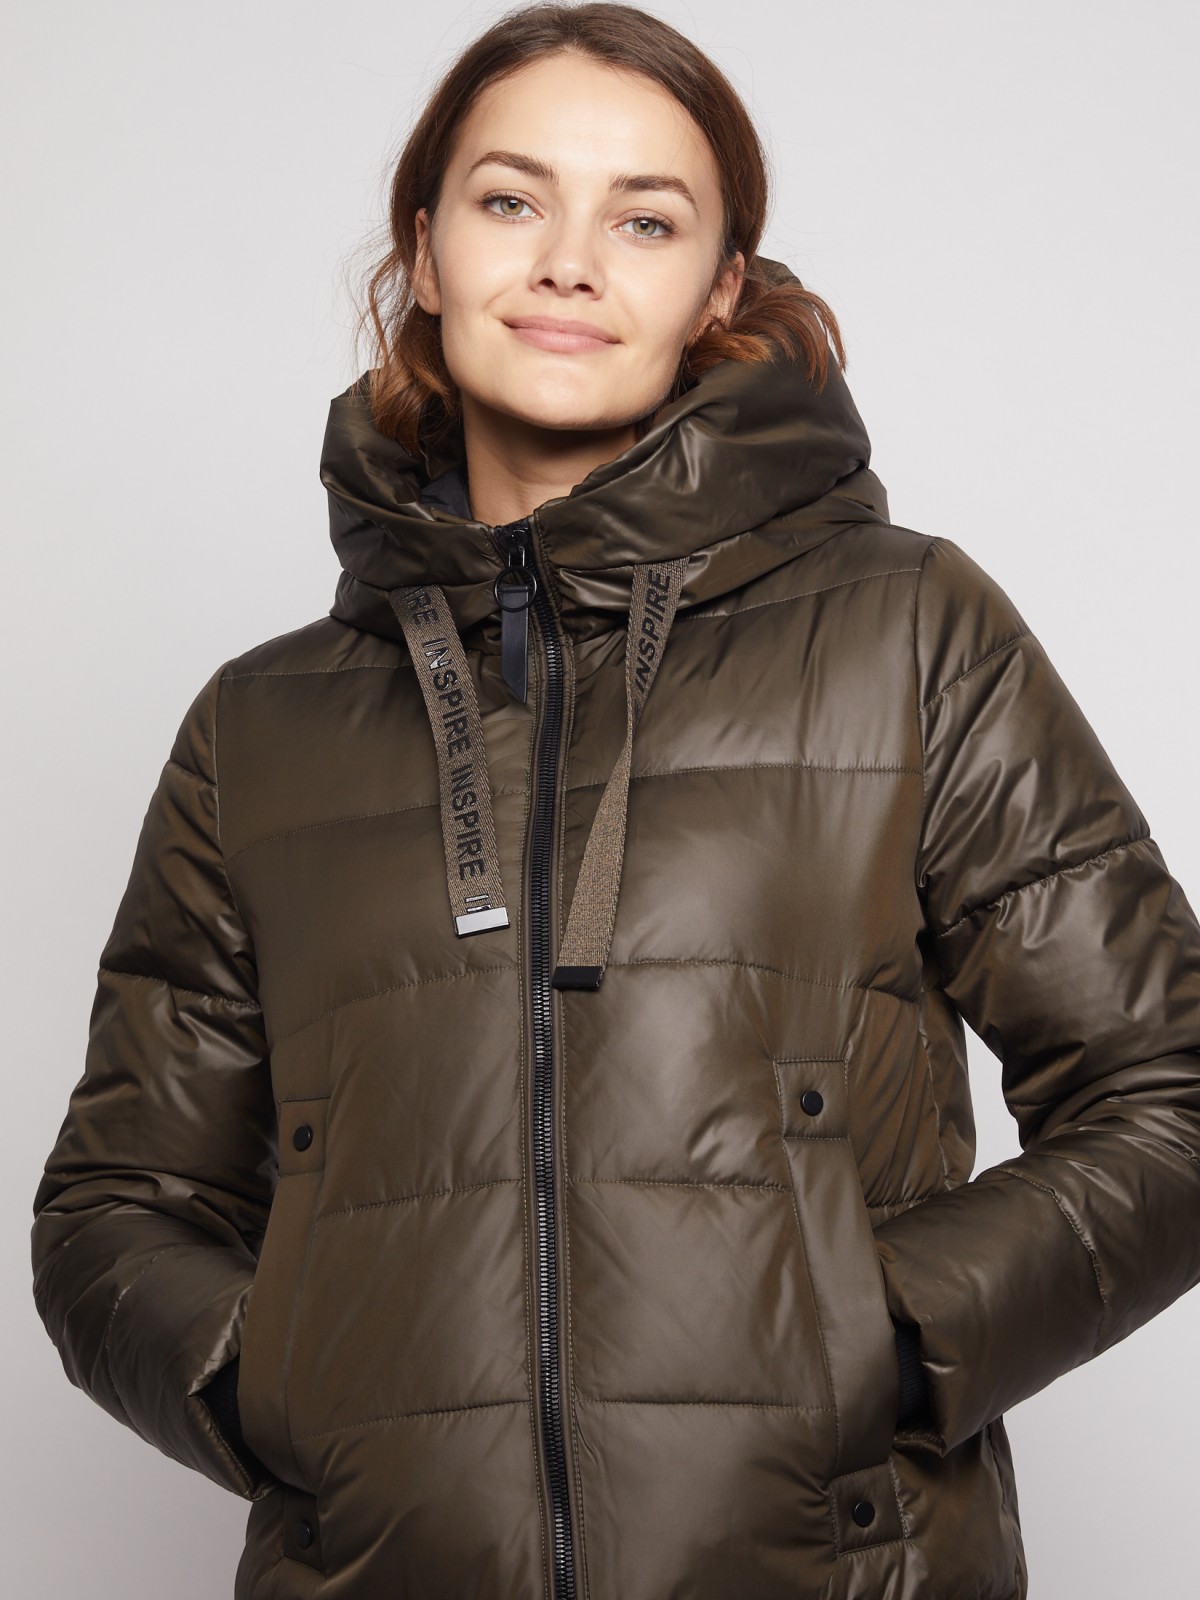 Утеплённое пальто с капюшоном zolla 020345212064, цвет хаки, размер XS - фото 2